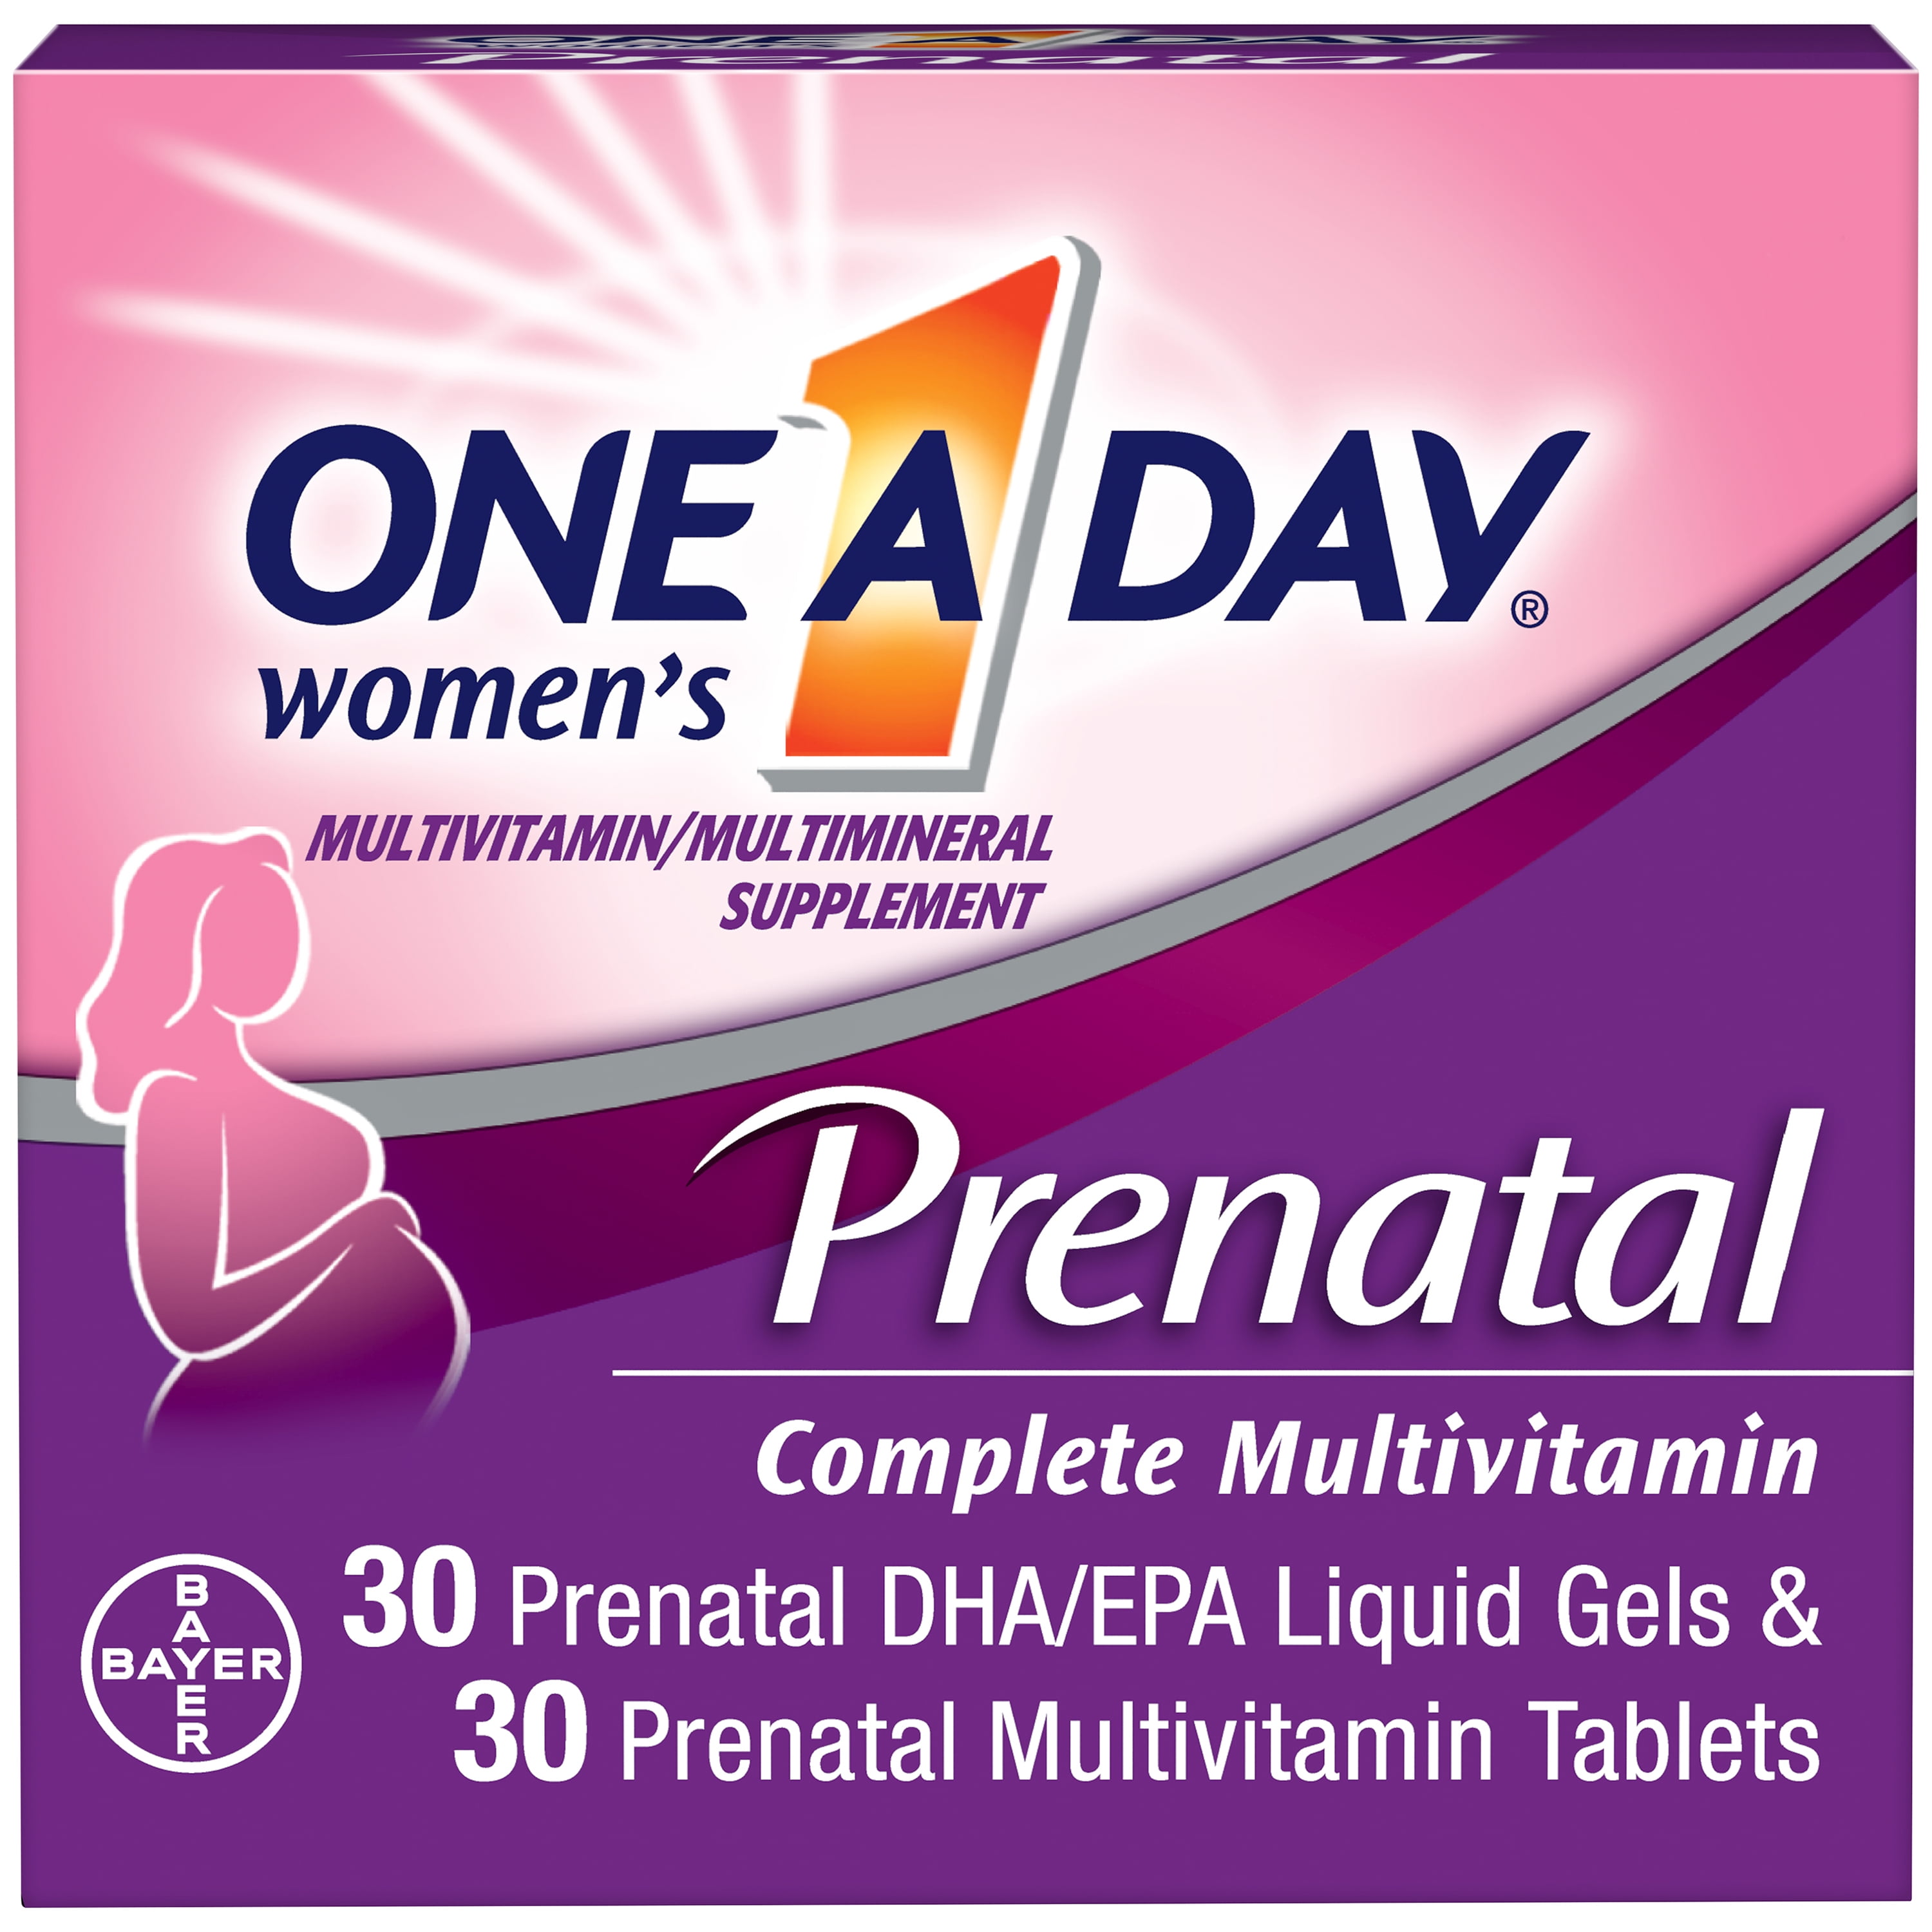 Pre pregnancy multivitamin